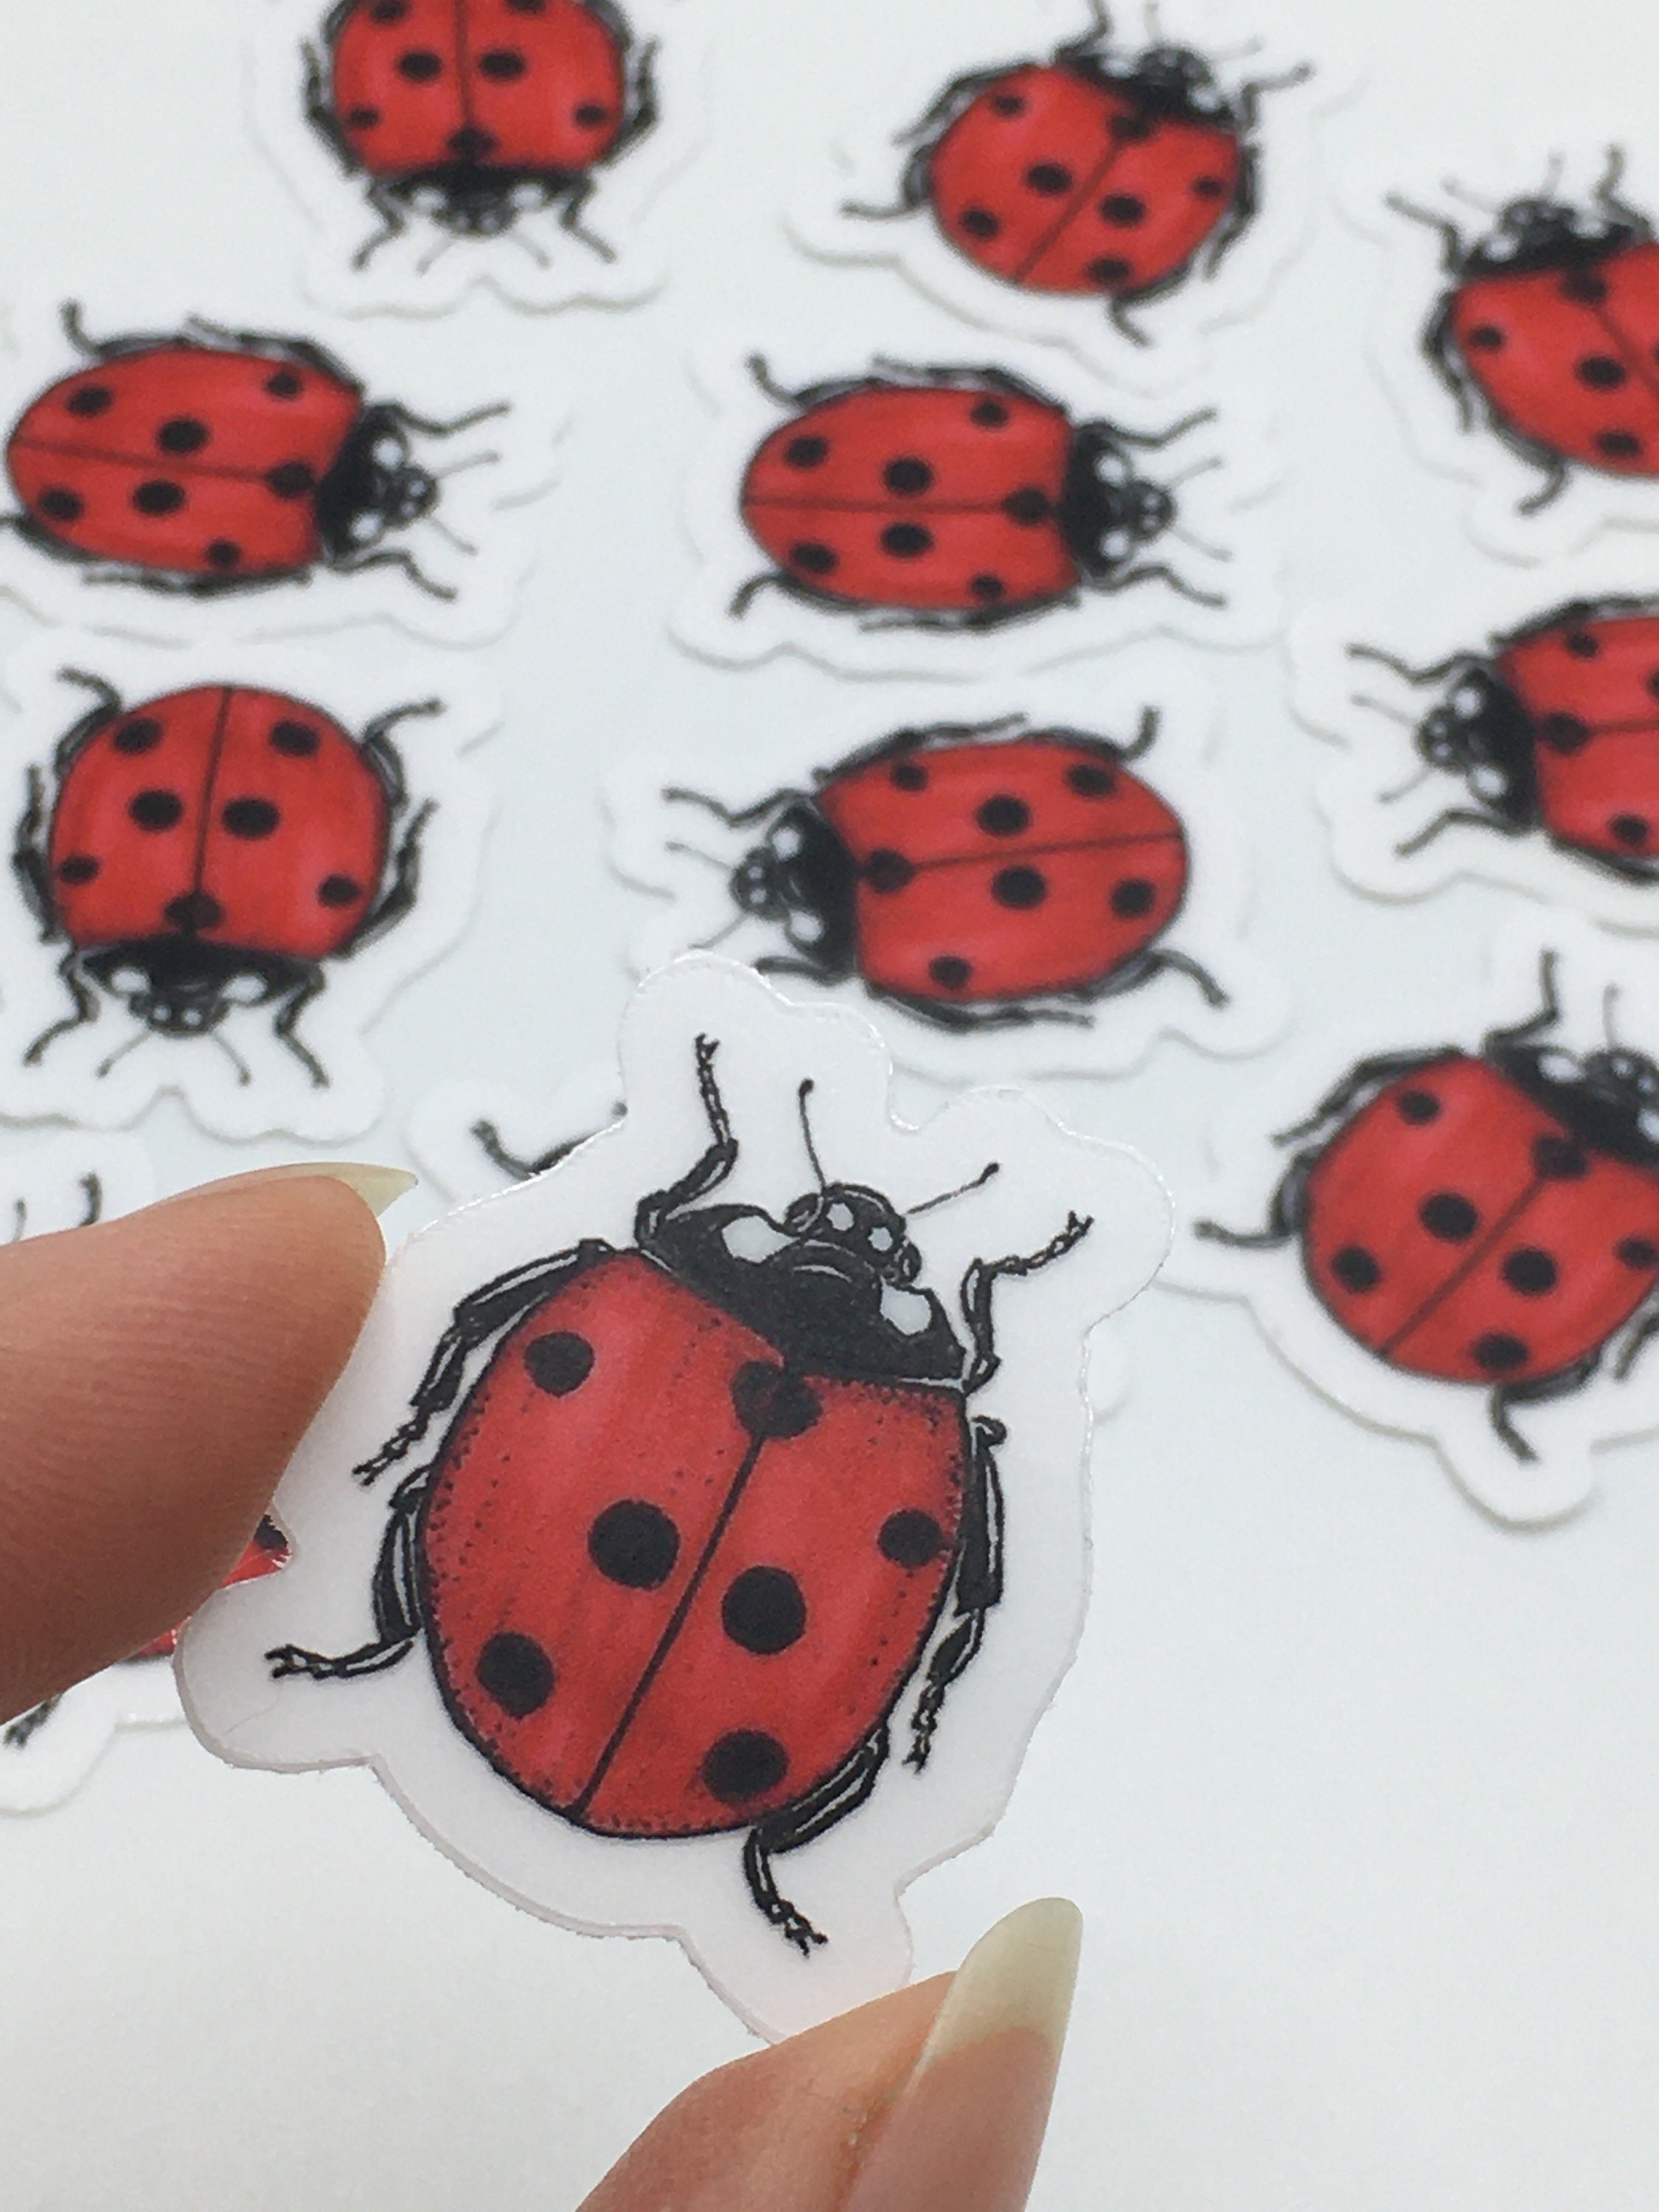 Lady Bug Sticker, Ladybug Sticker, Cute Animal Stickers, Scrapbook